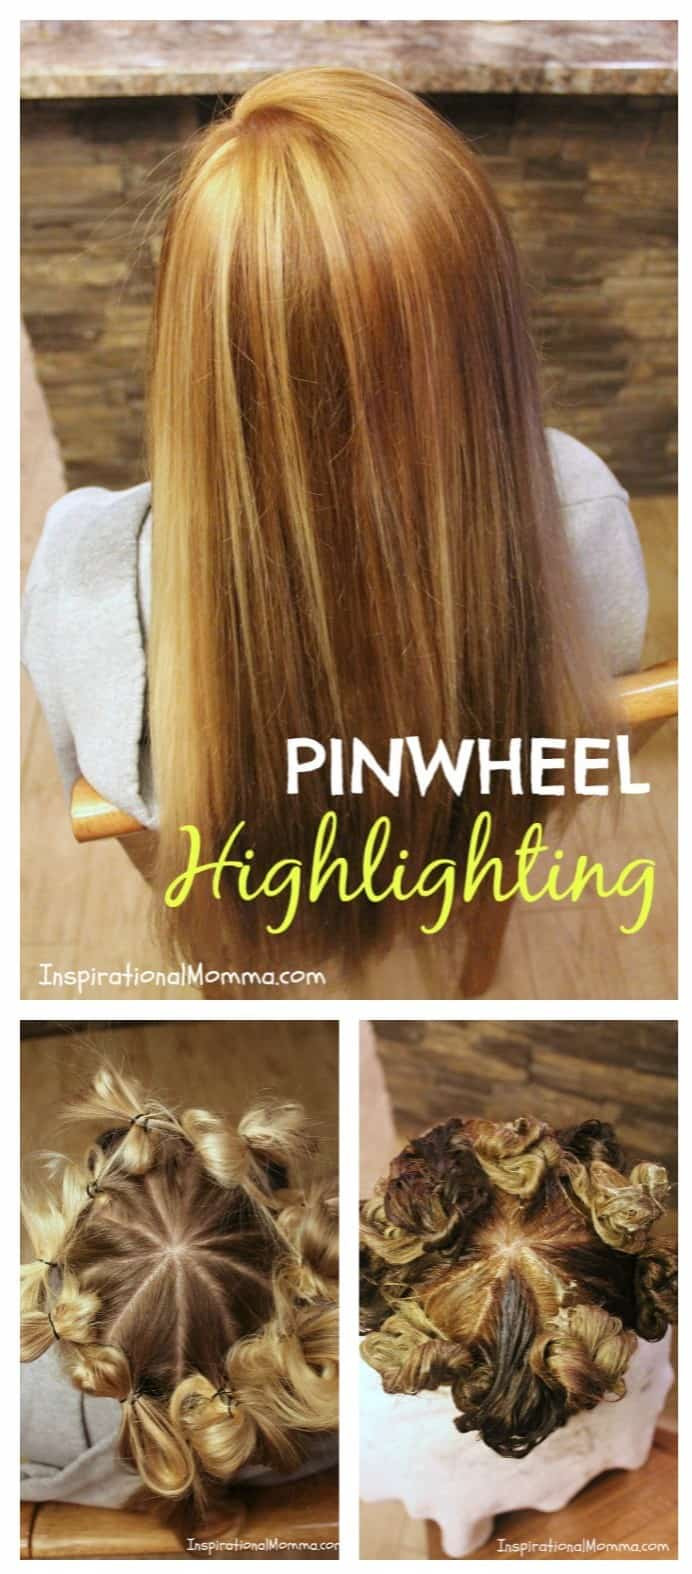 DIY Highlight Hair
 Pinwheel Highlighting